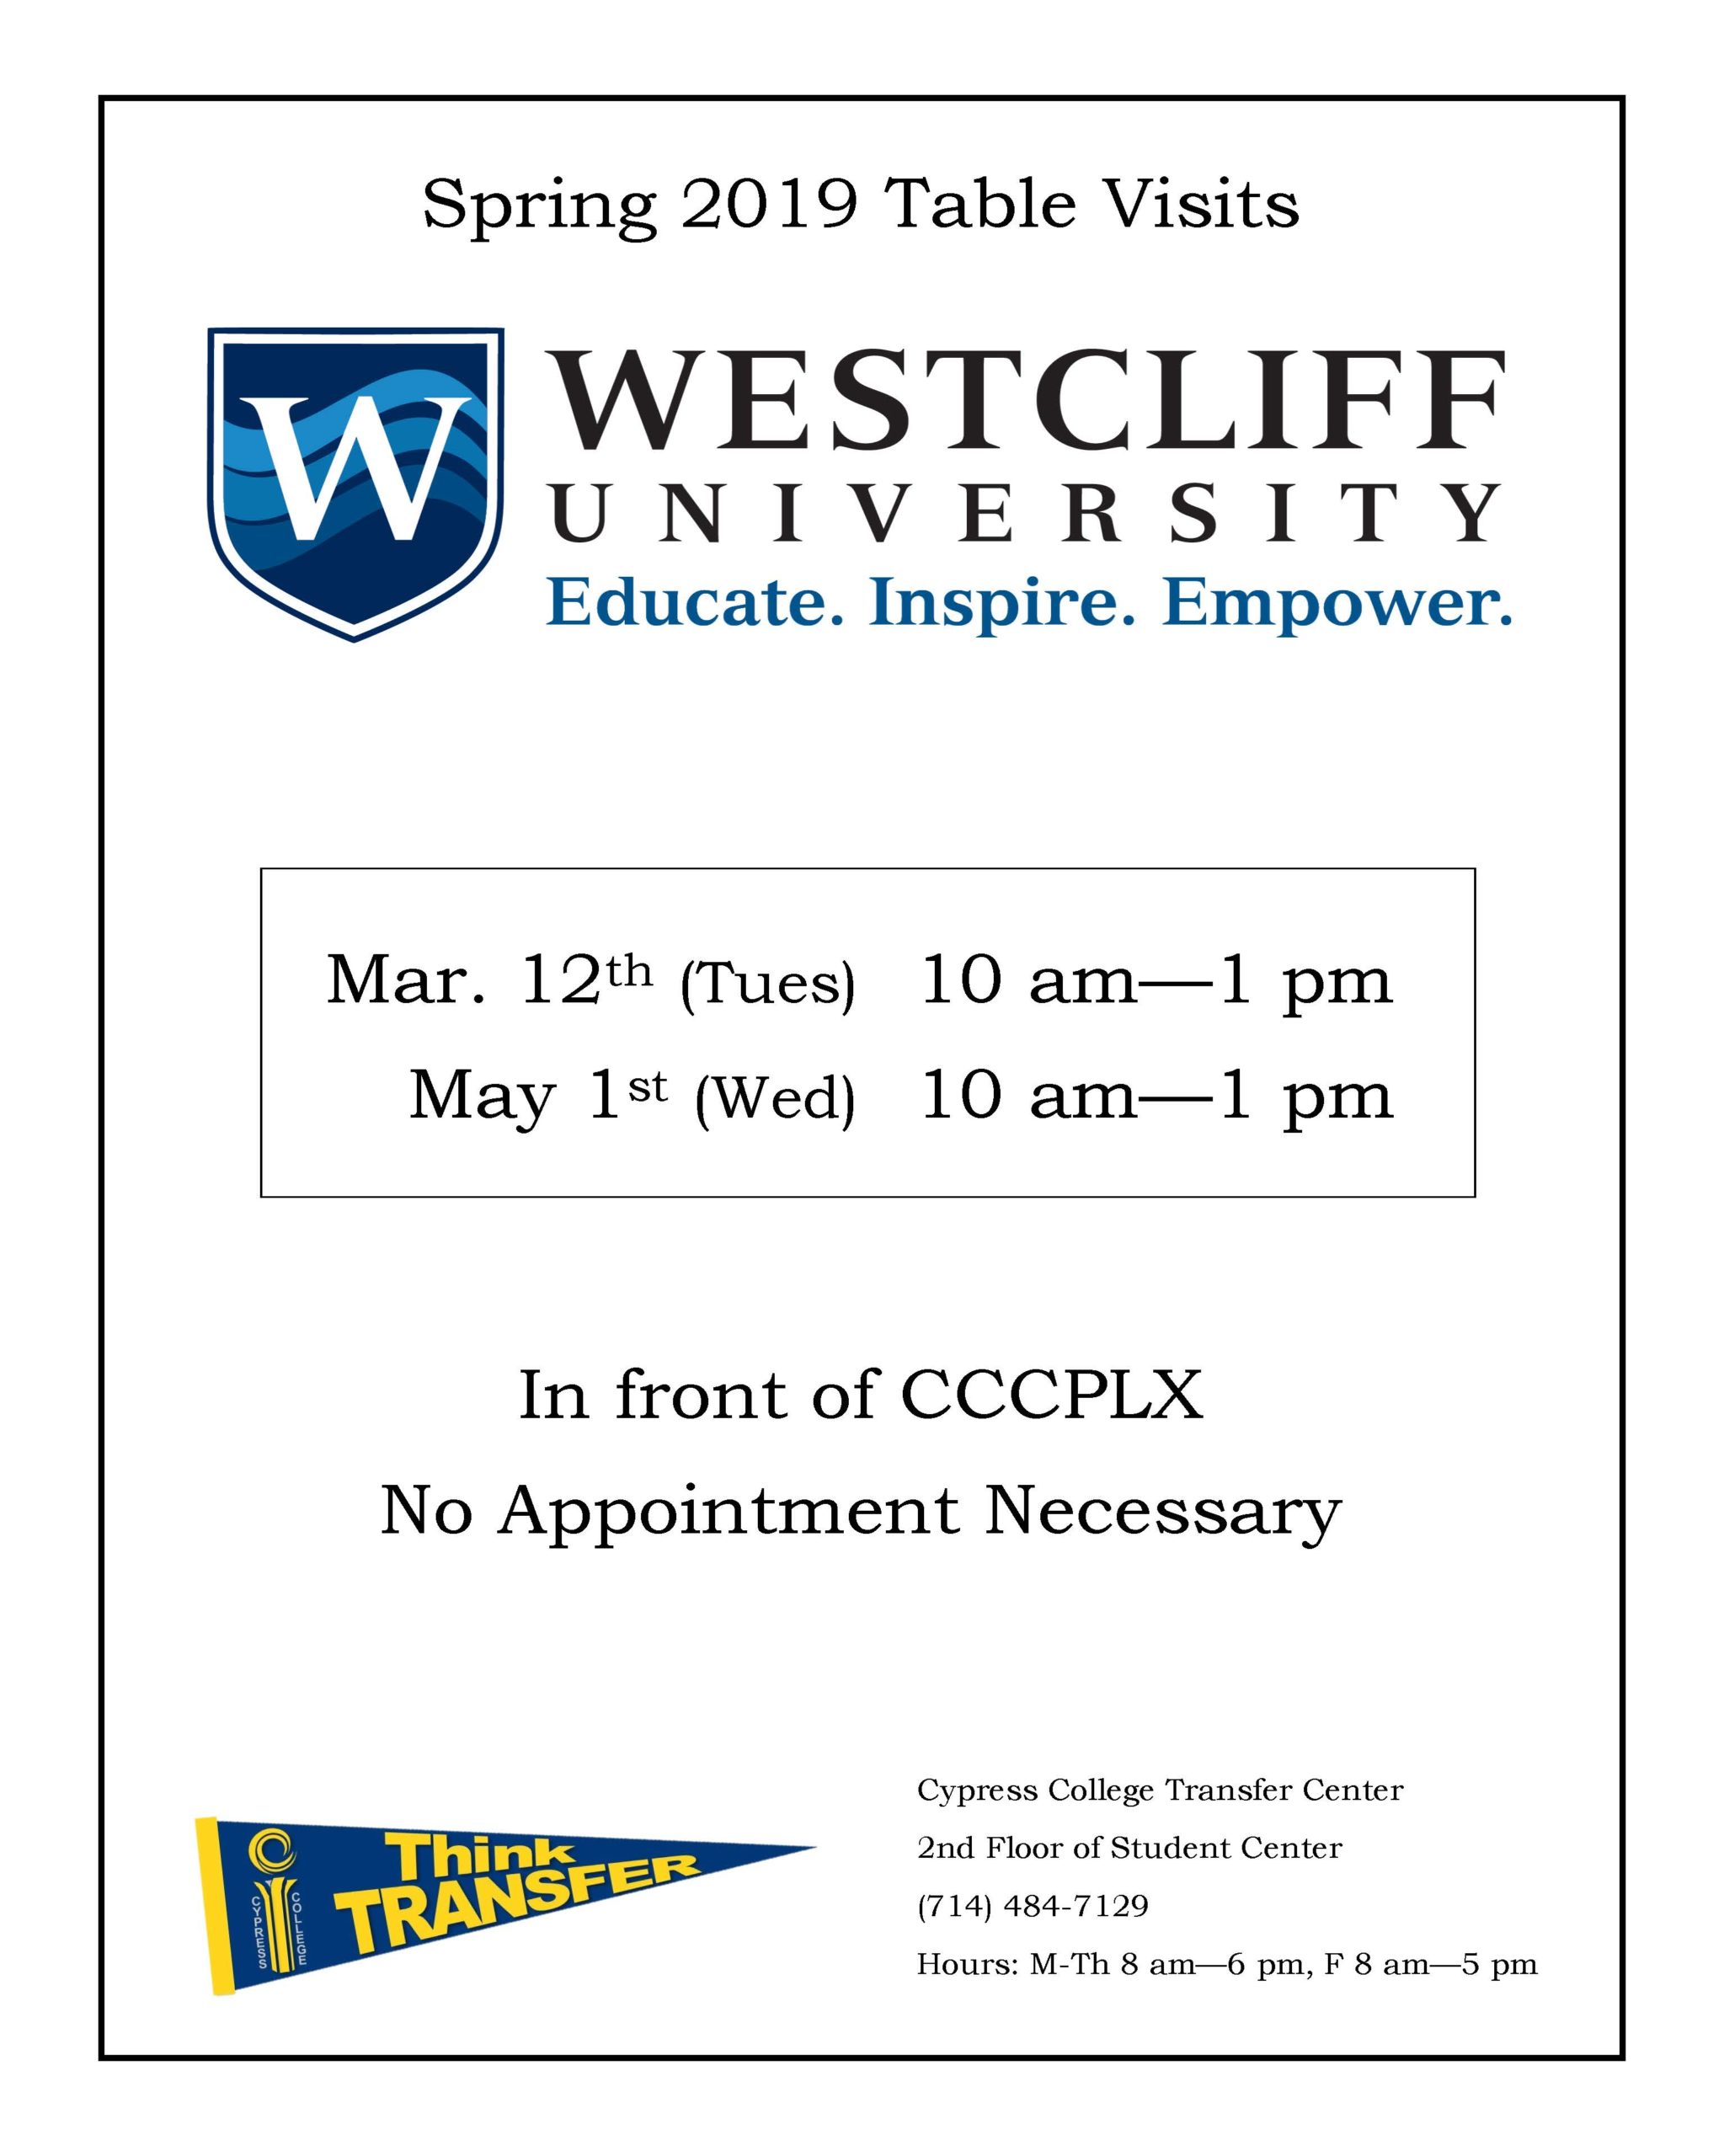 Spring 2019 Table Visits Westcliff University flyer